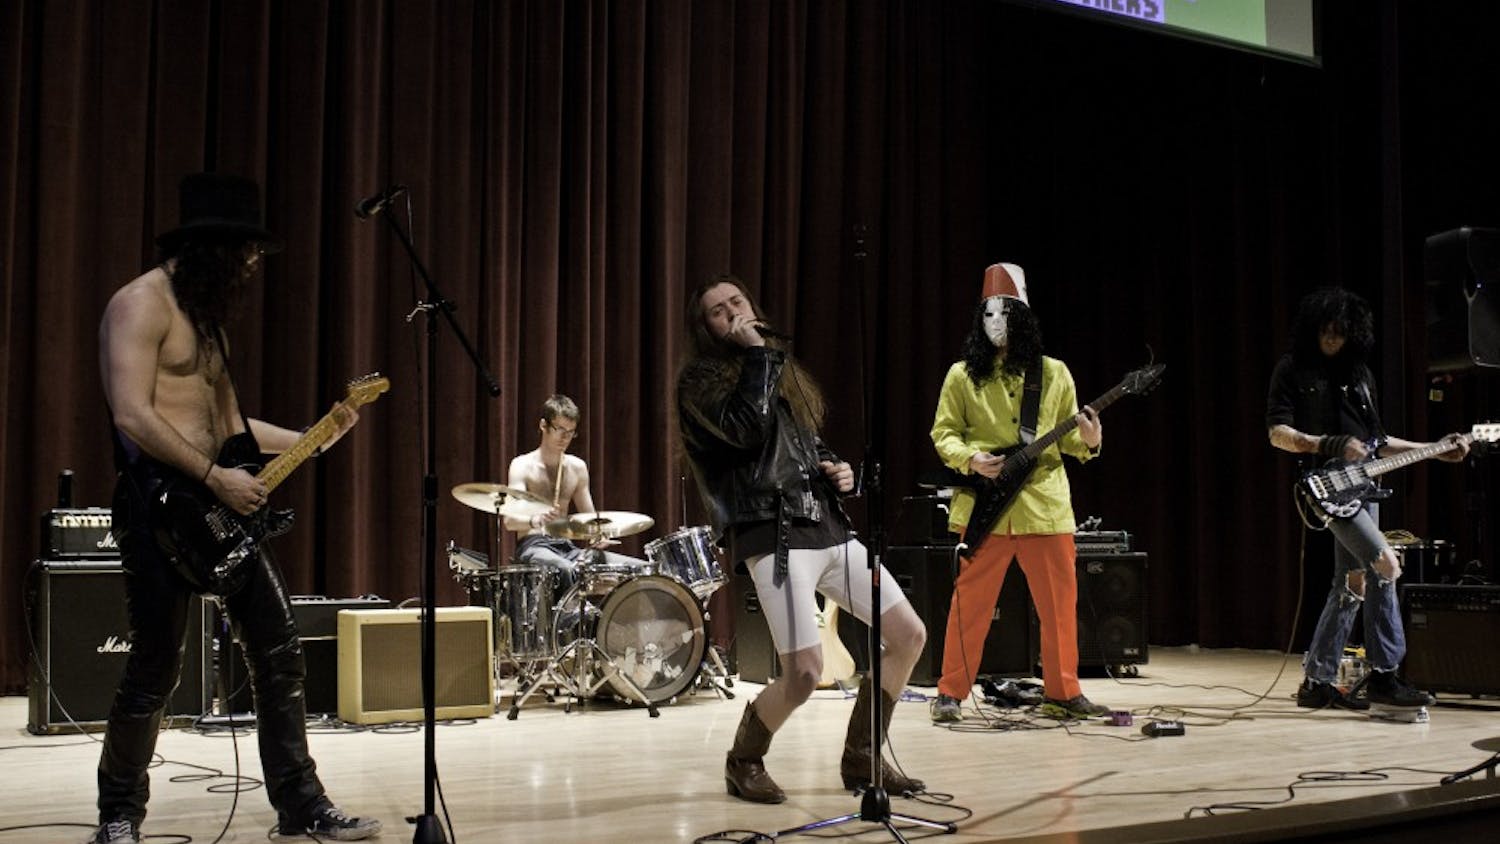 	The performances took place Saturday in the Student Center Auditorium.